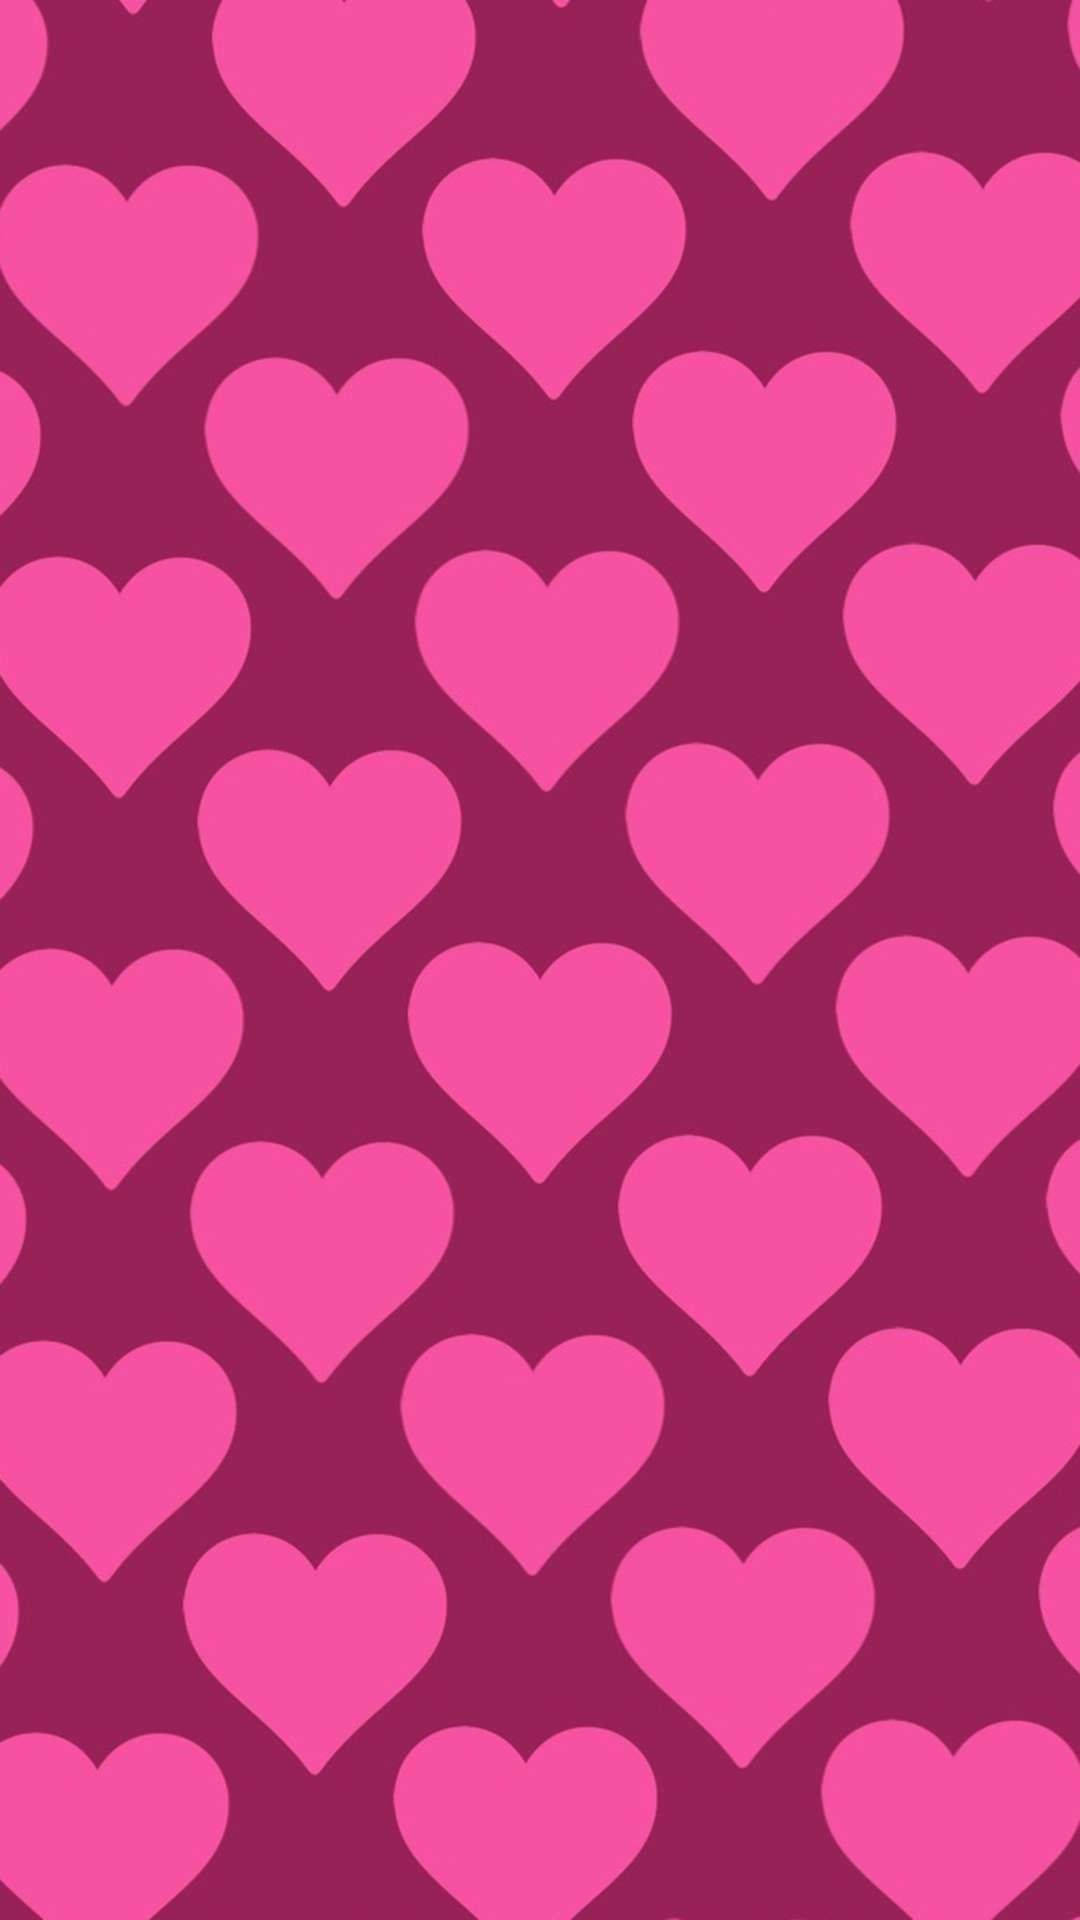 Cute Love Art Using Heart Shapes Wallpaper